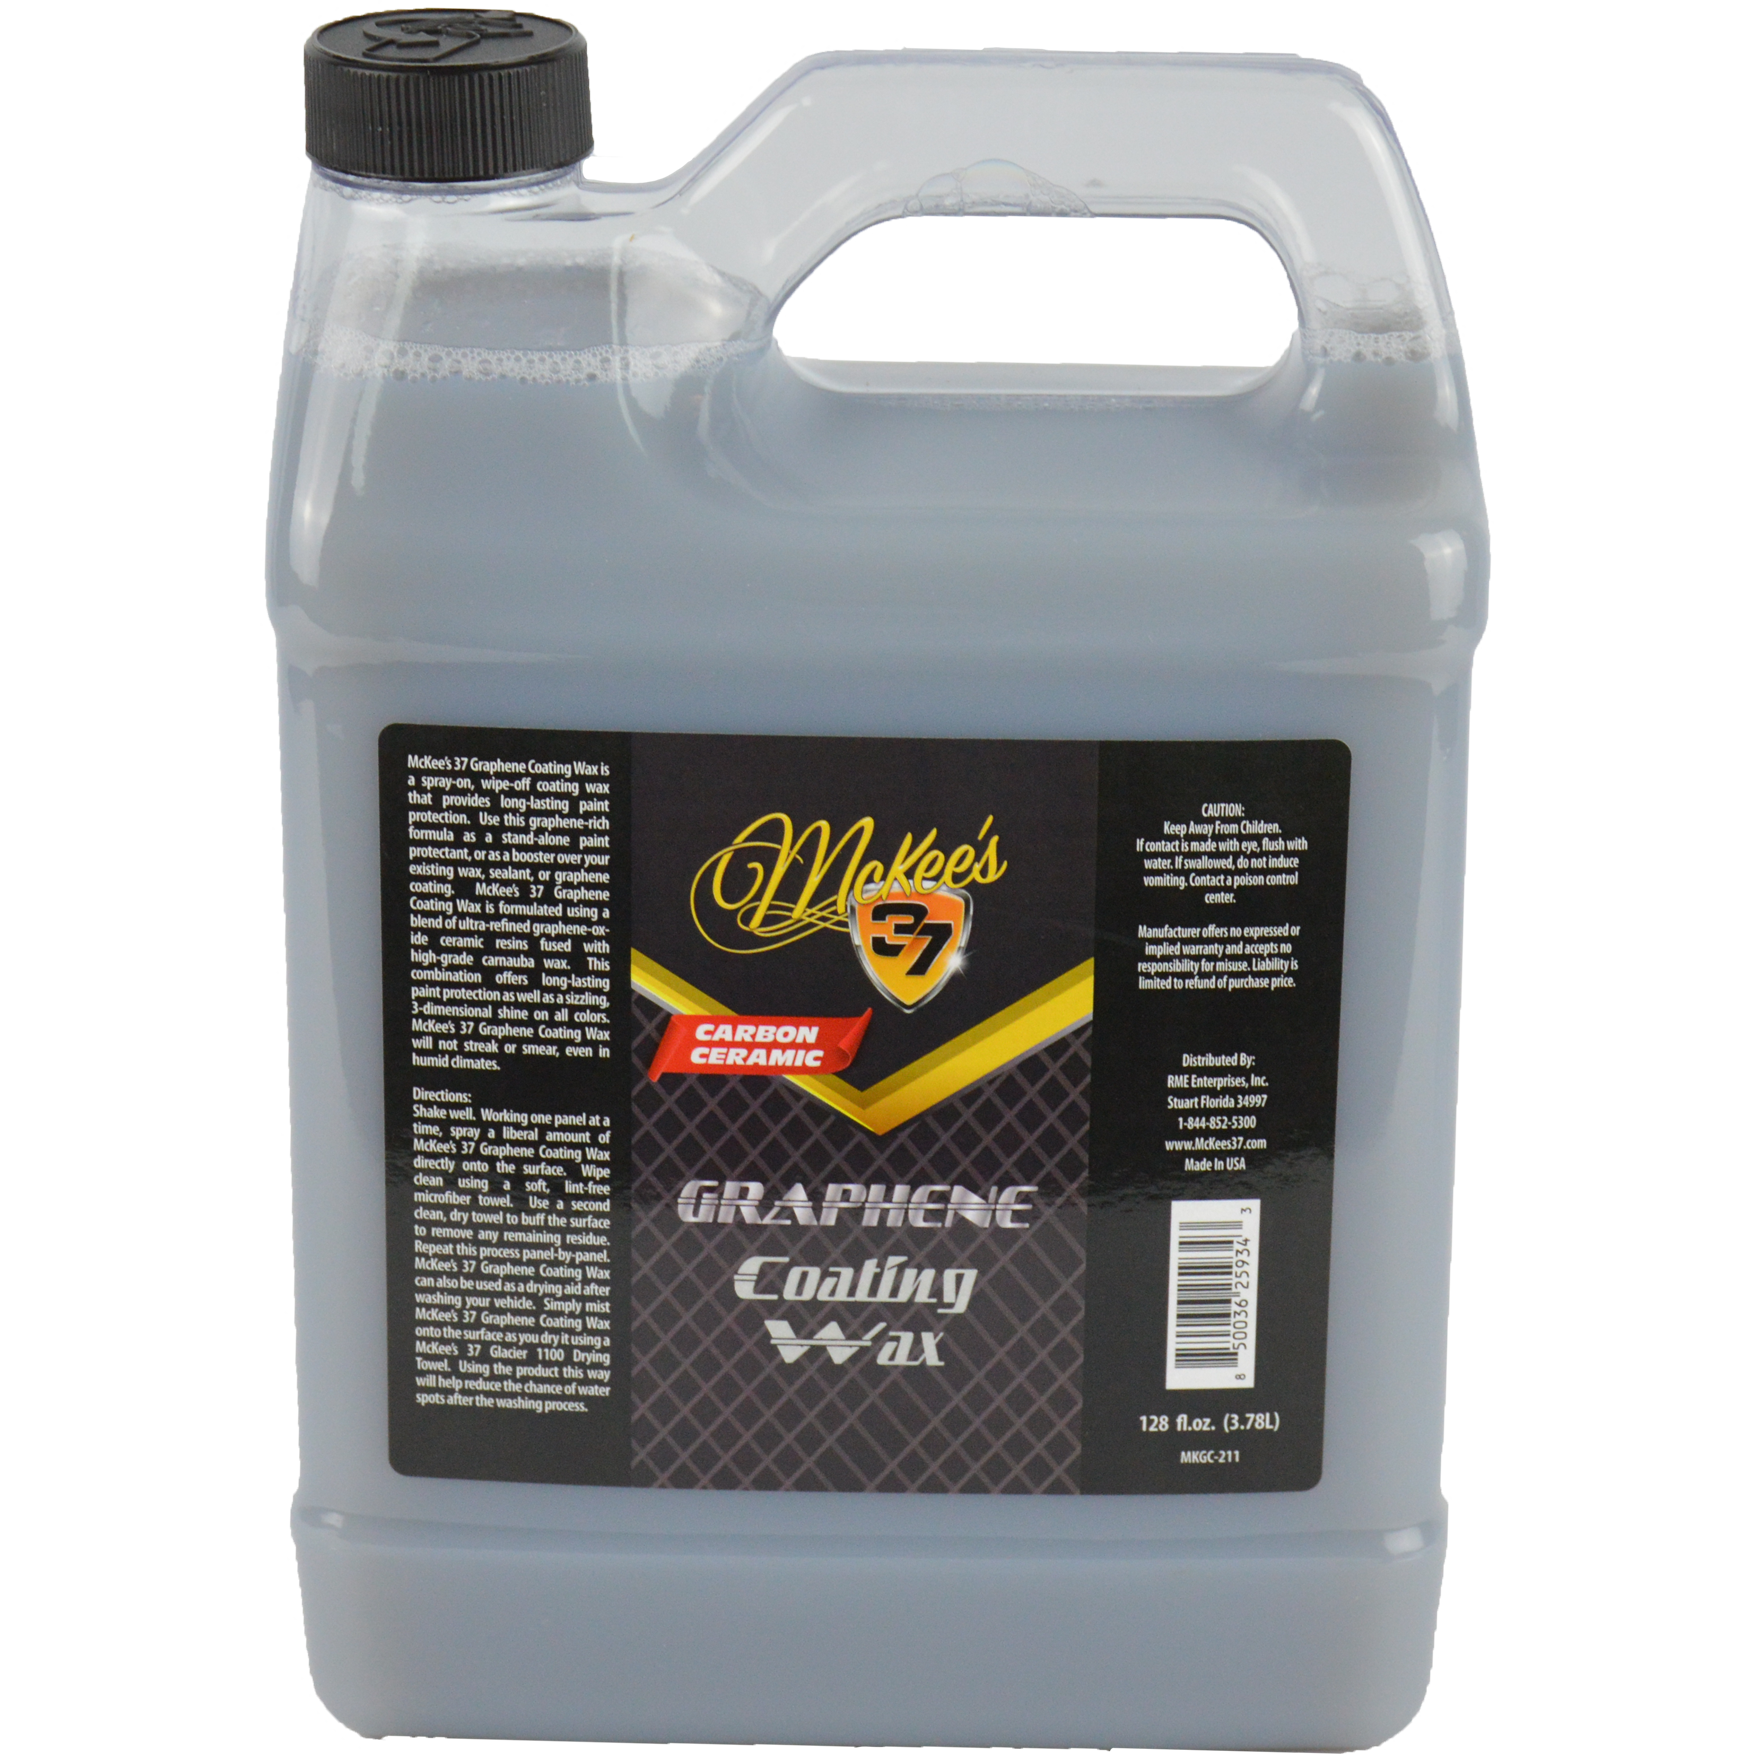 Cleanse - Graphene Coating Car Shampoo, 1 - Gallon (Best Value)